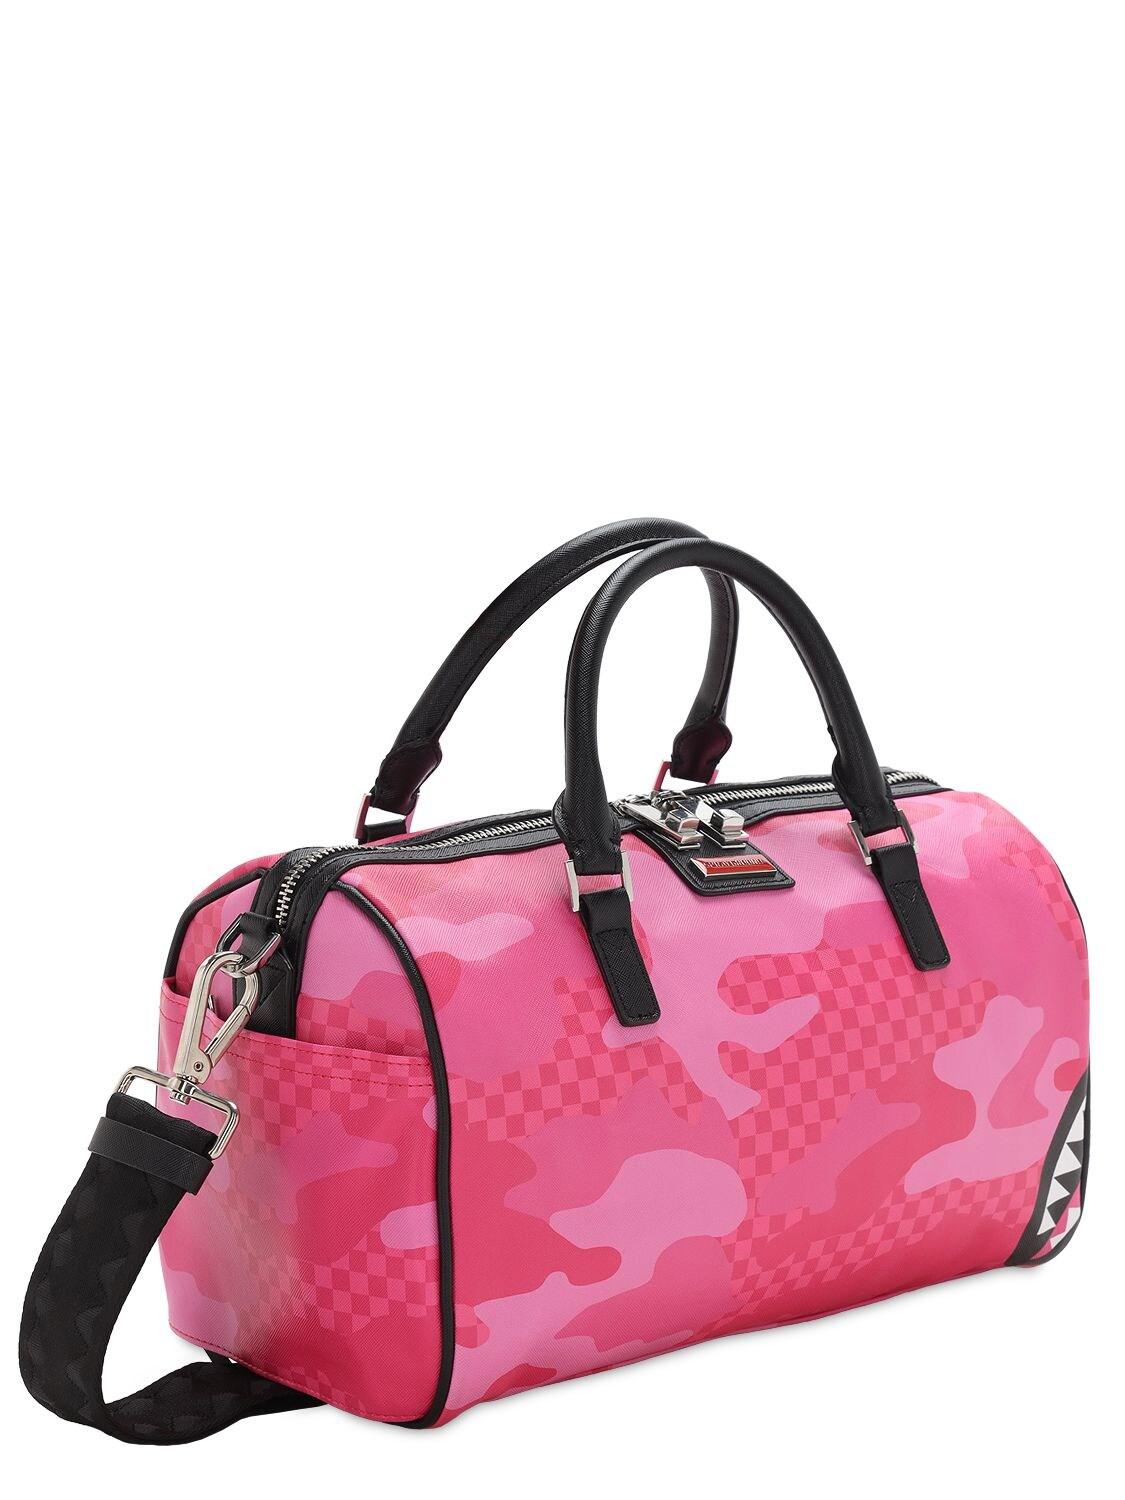 sprayground duffle bag pink